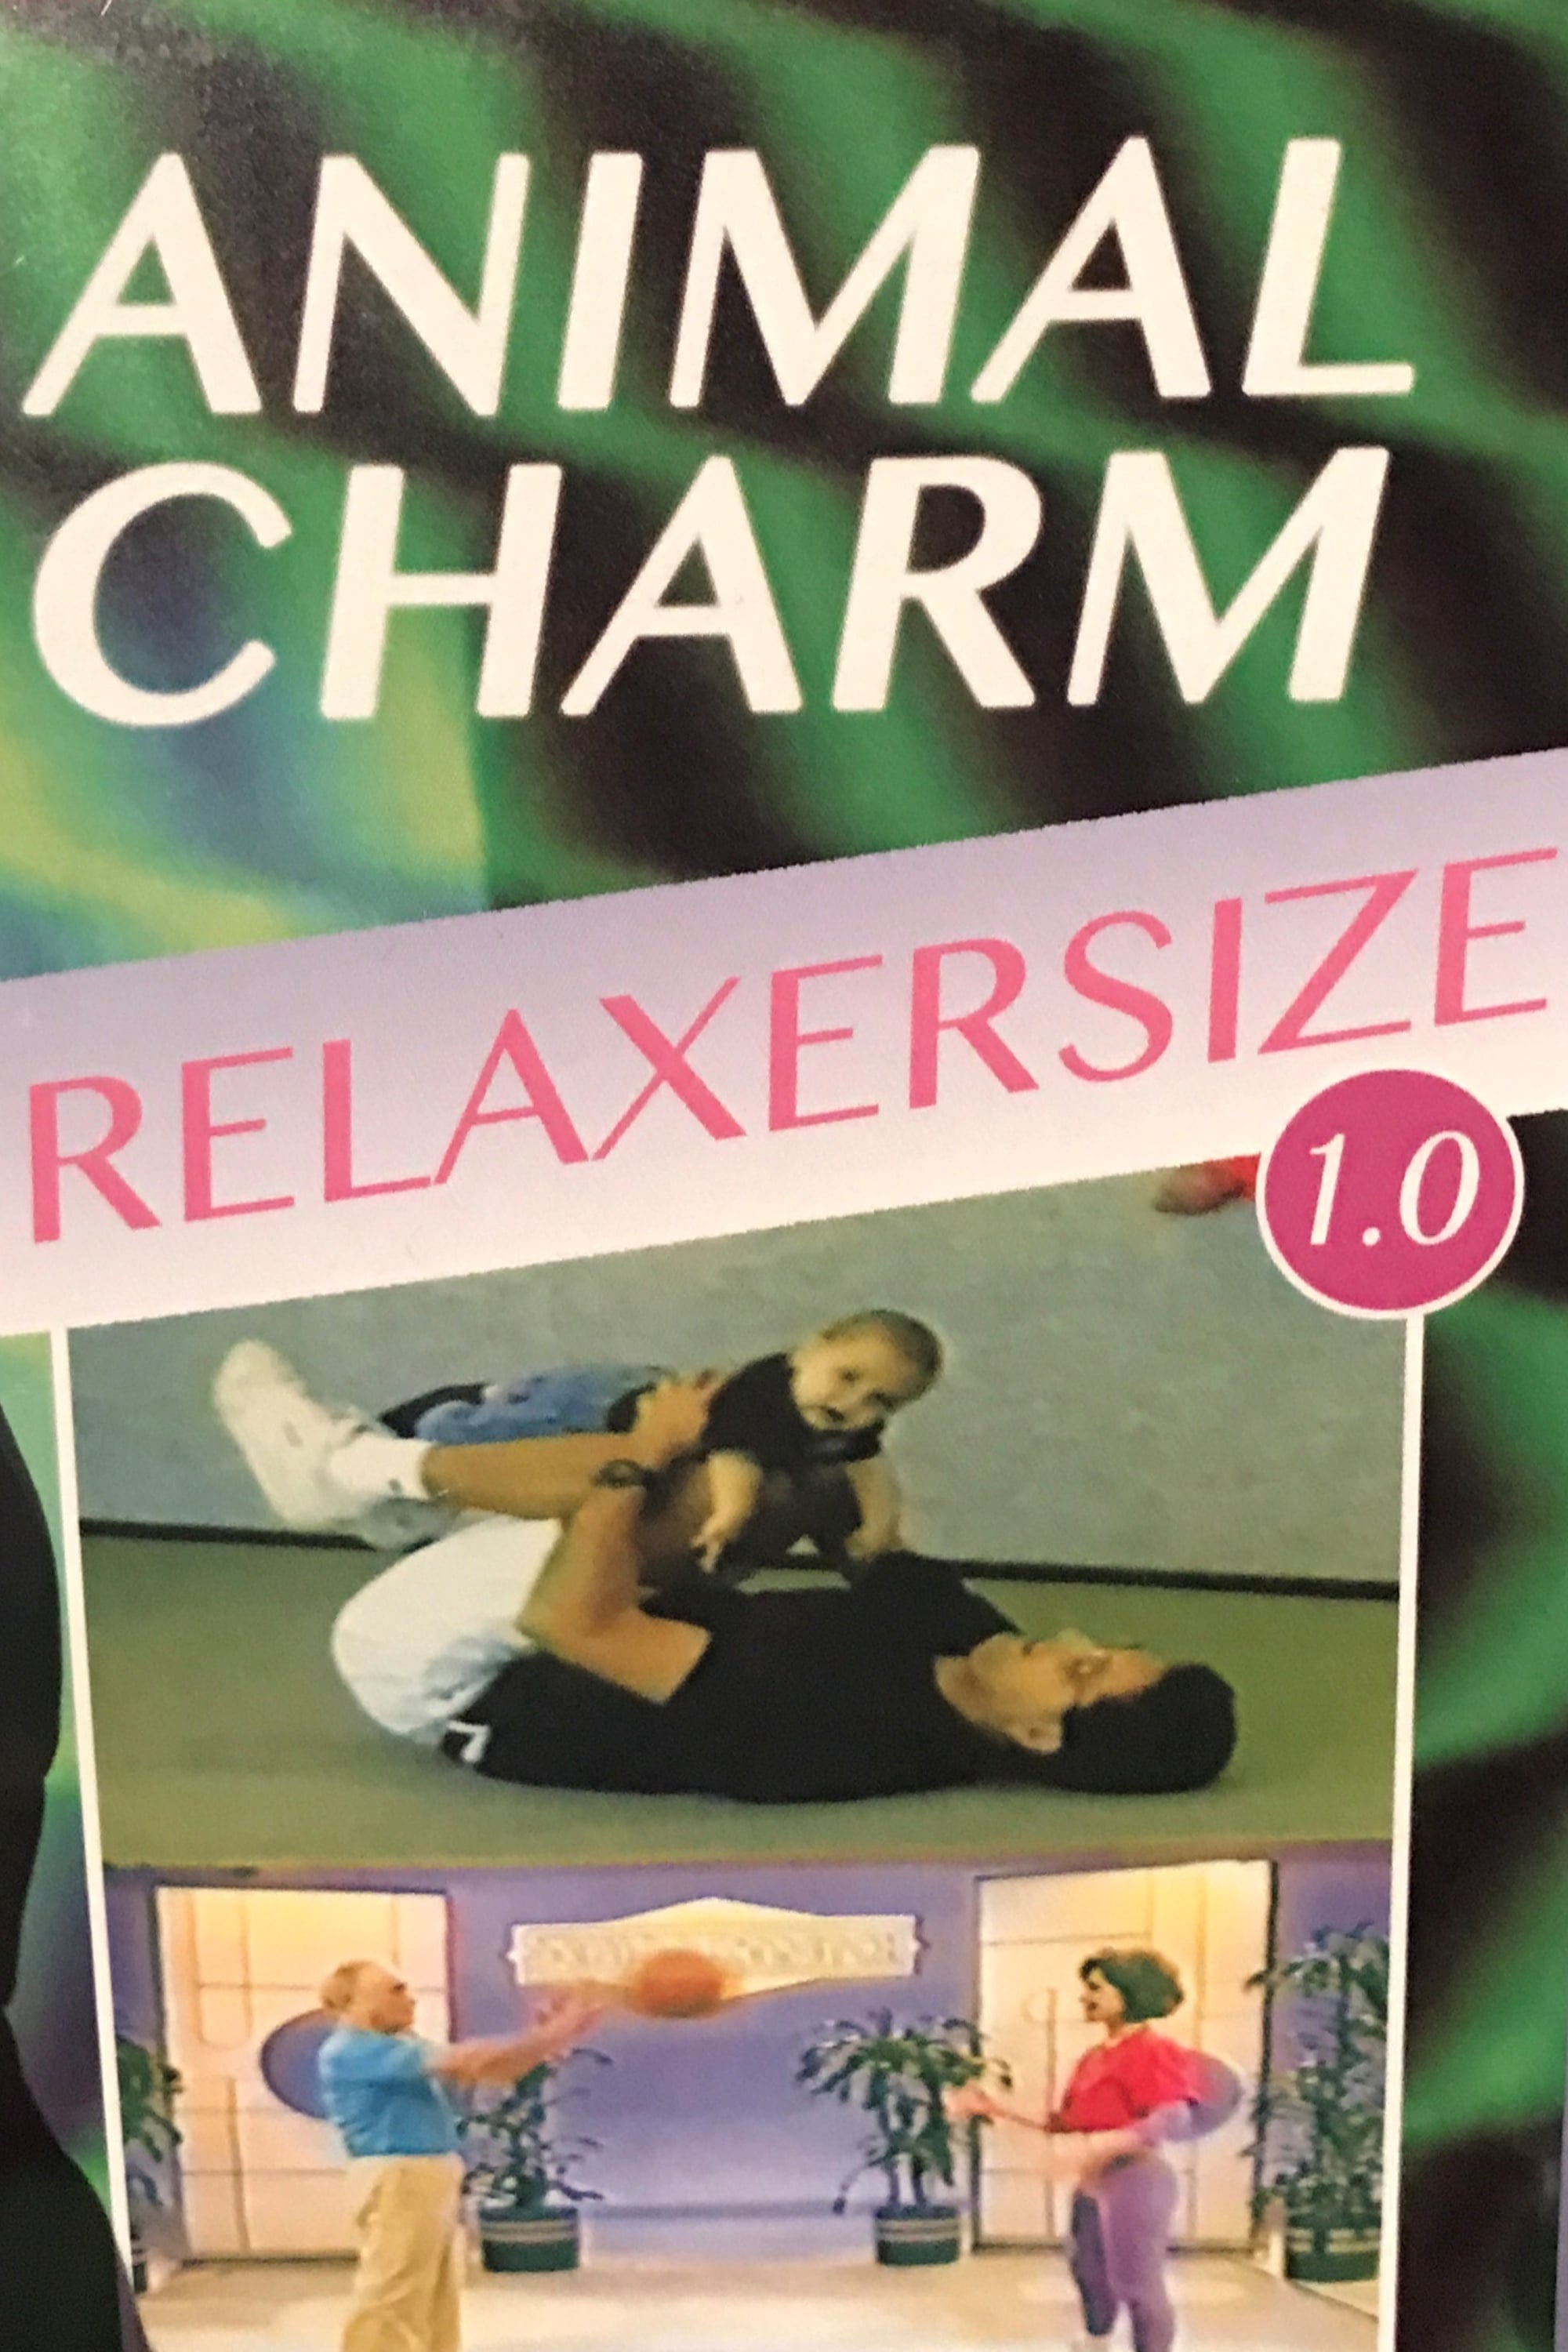 Relaxersize 1.0